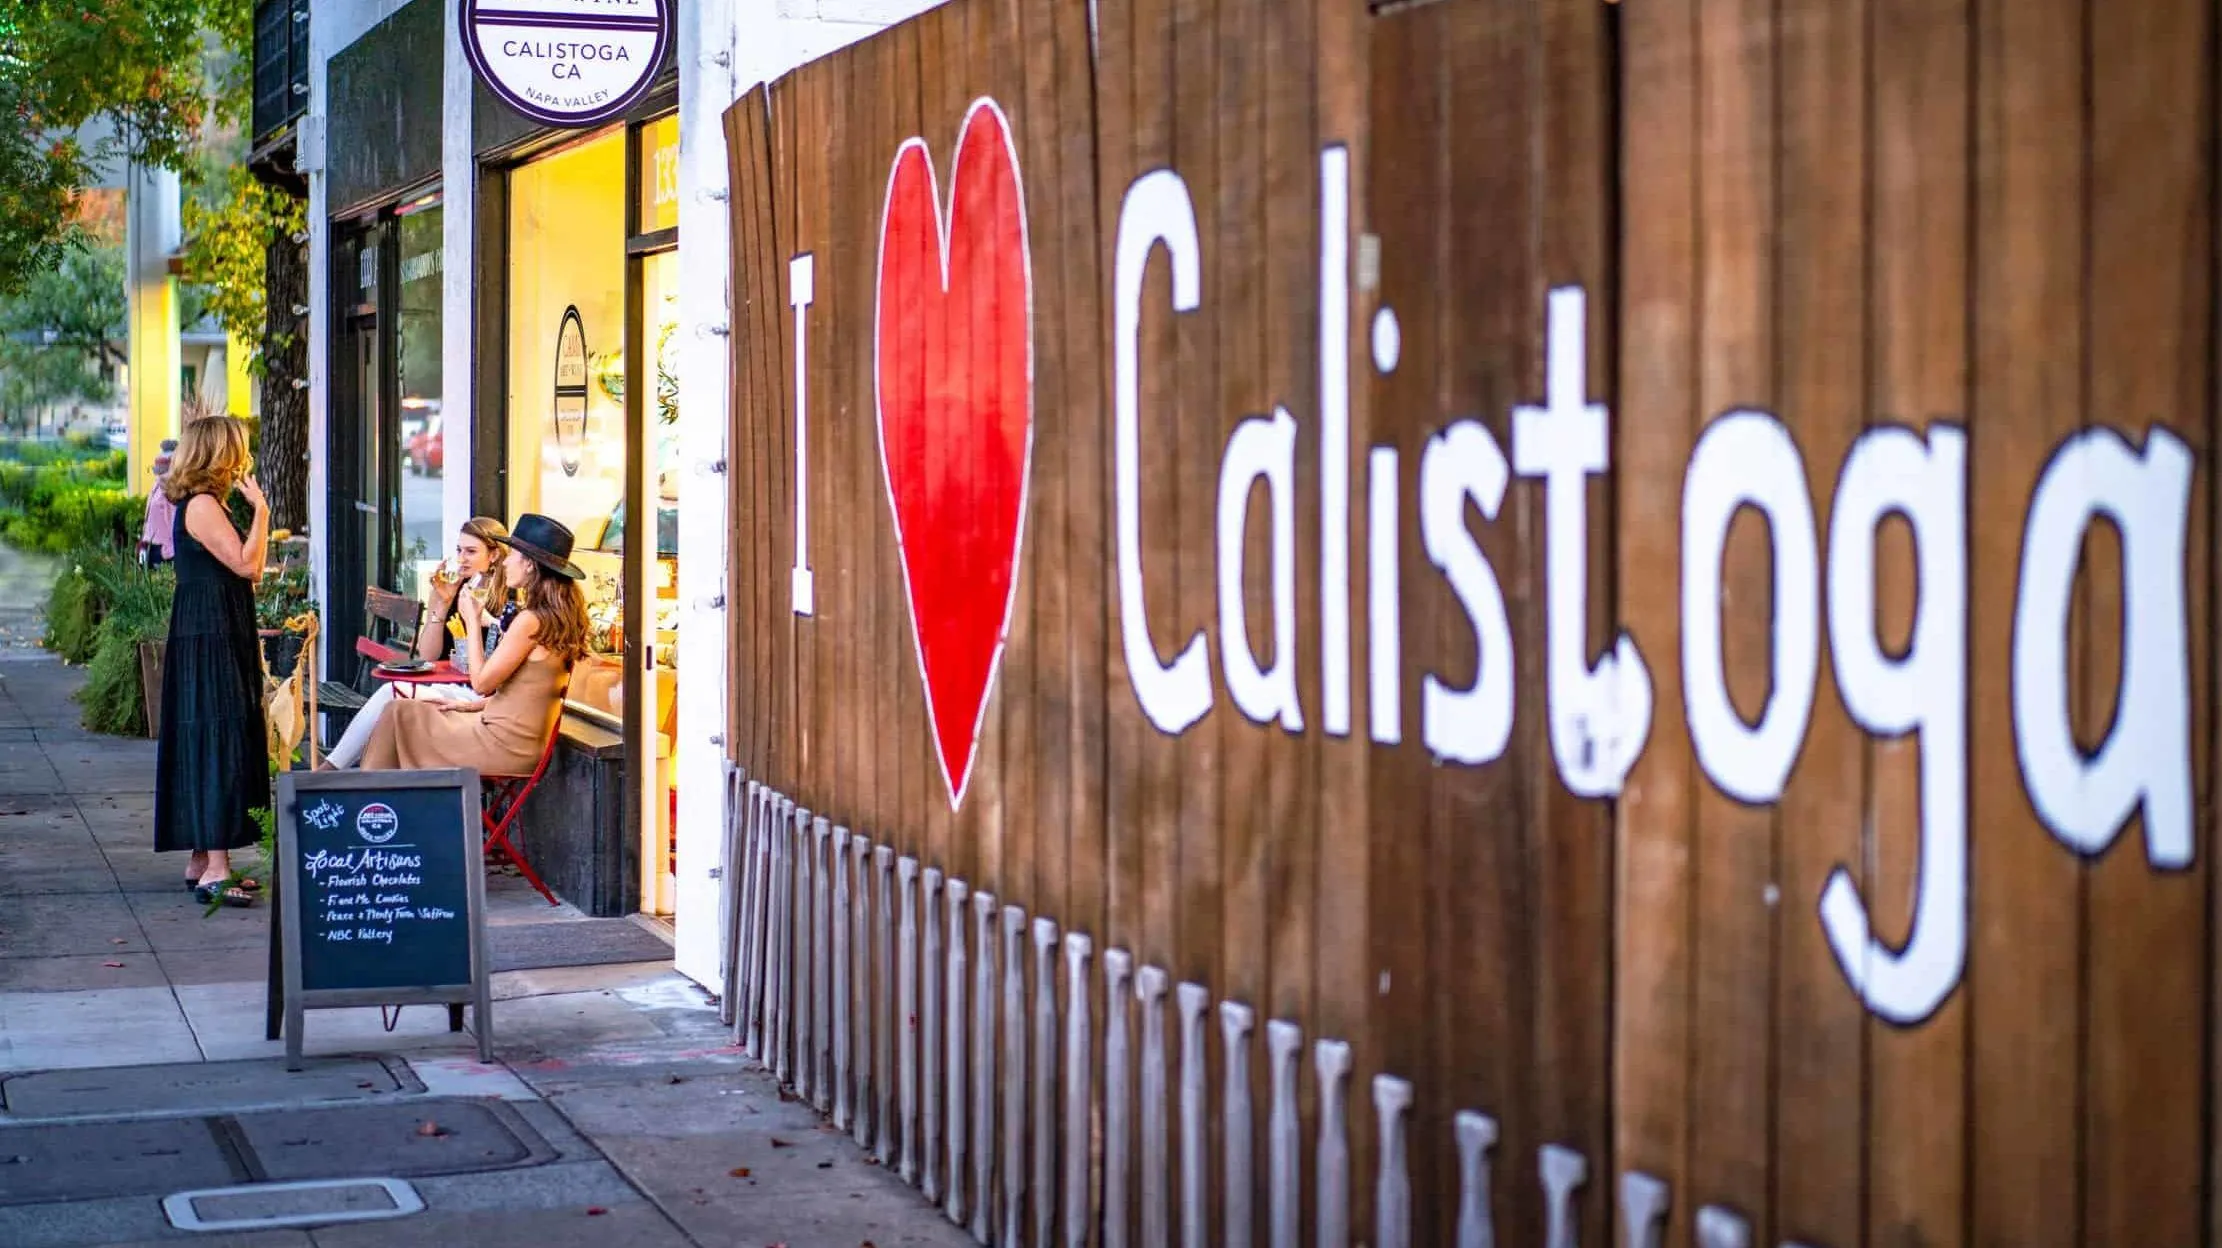 I Love Calistoga art. Photo by Tim Carl.